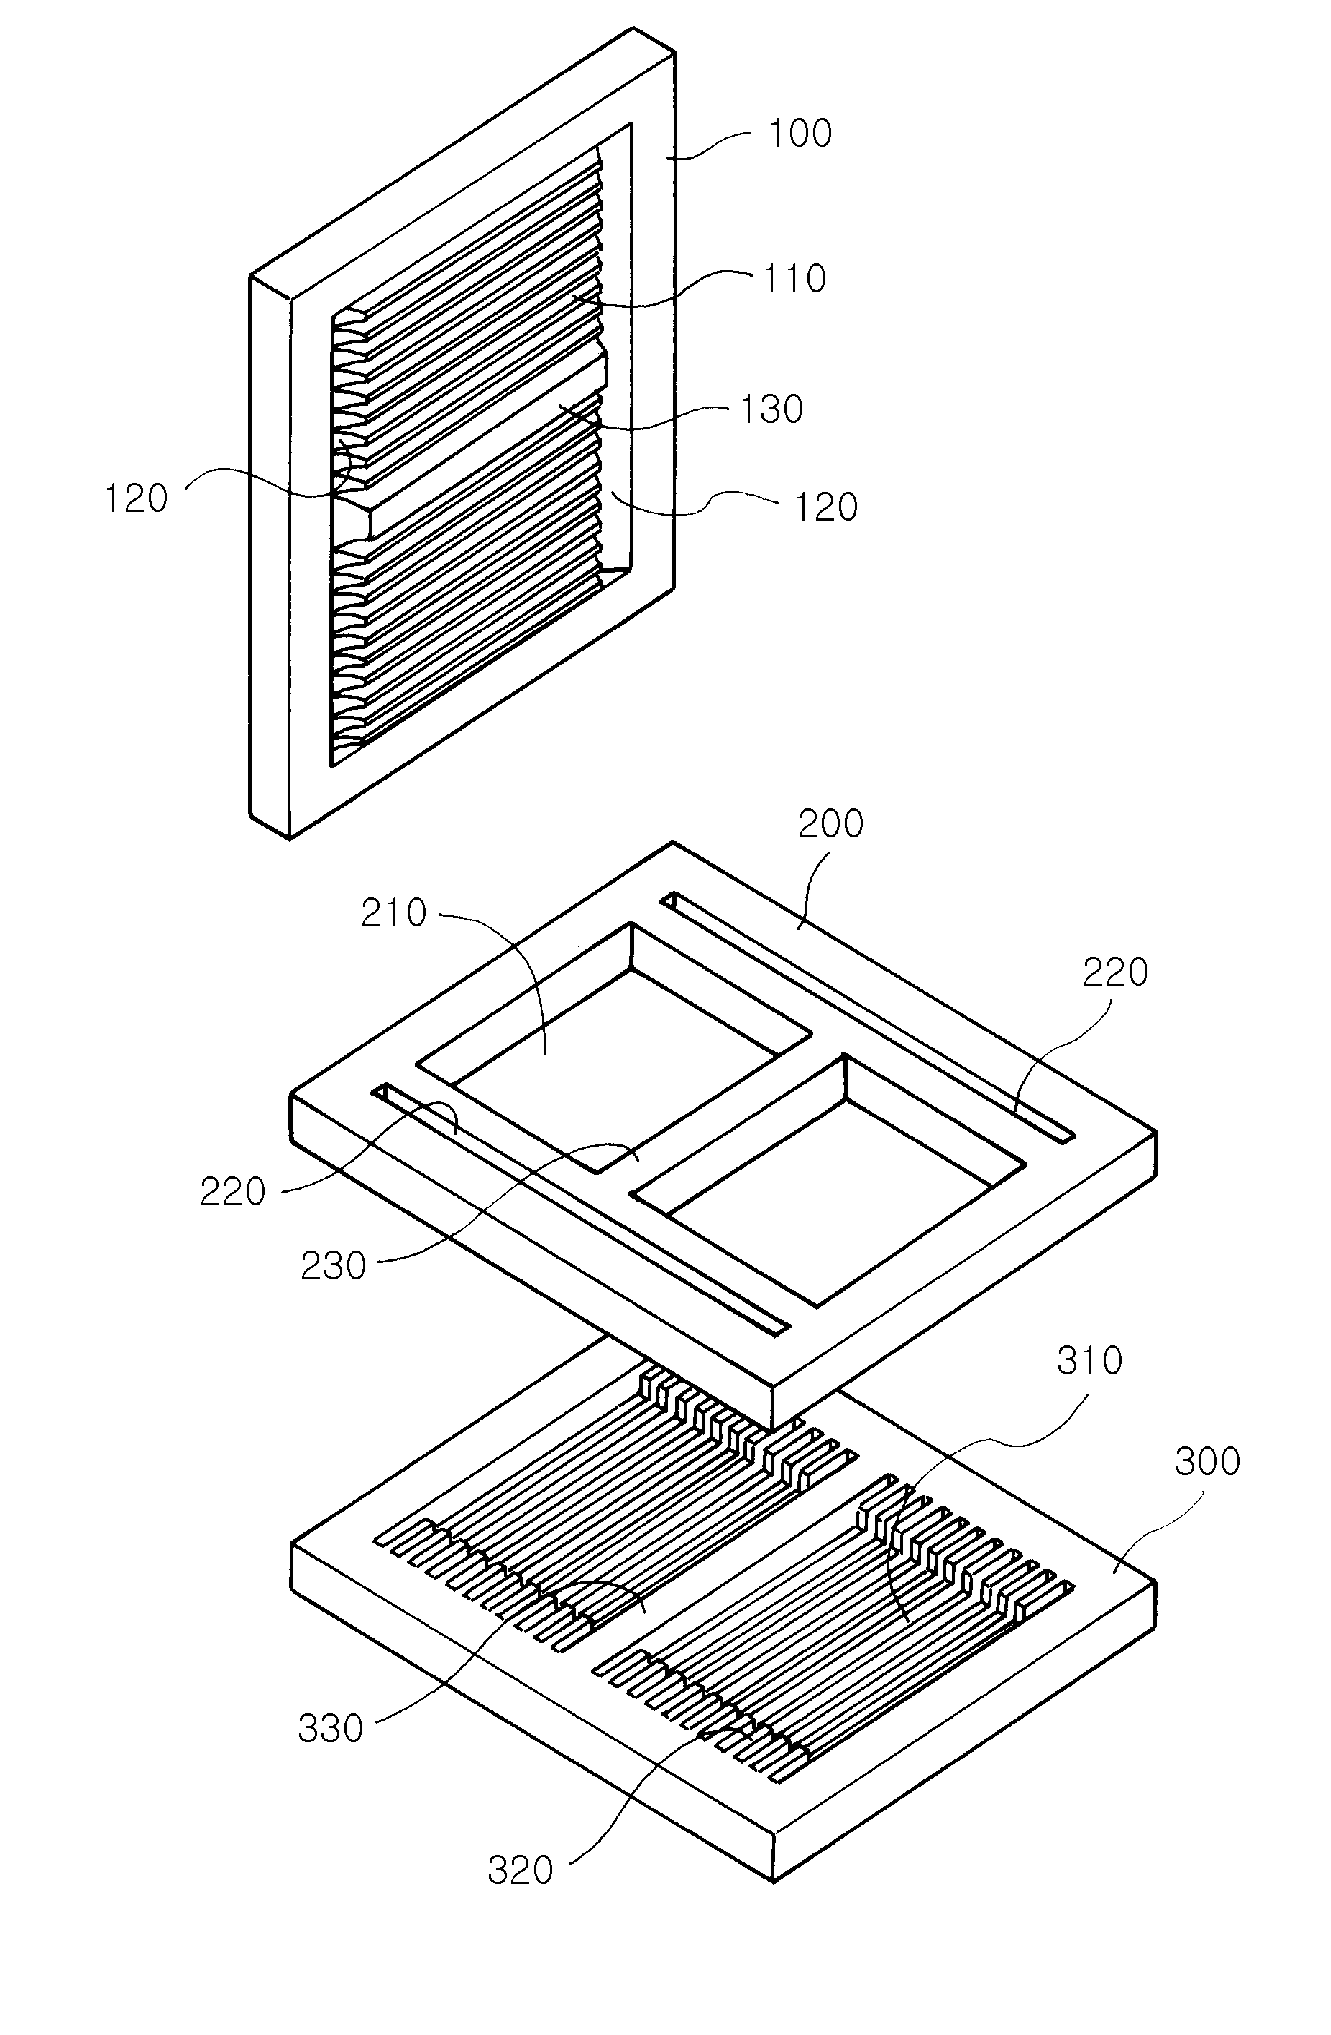 Flat plate type micro heat spreading device